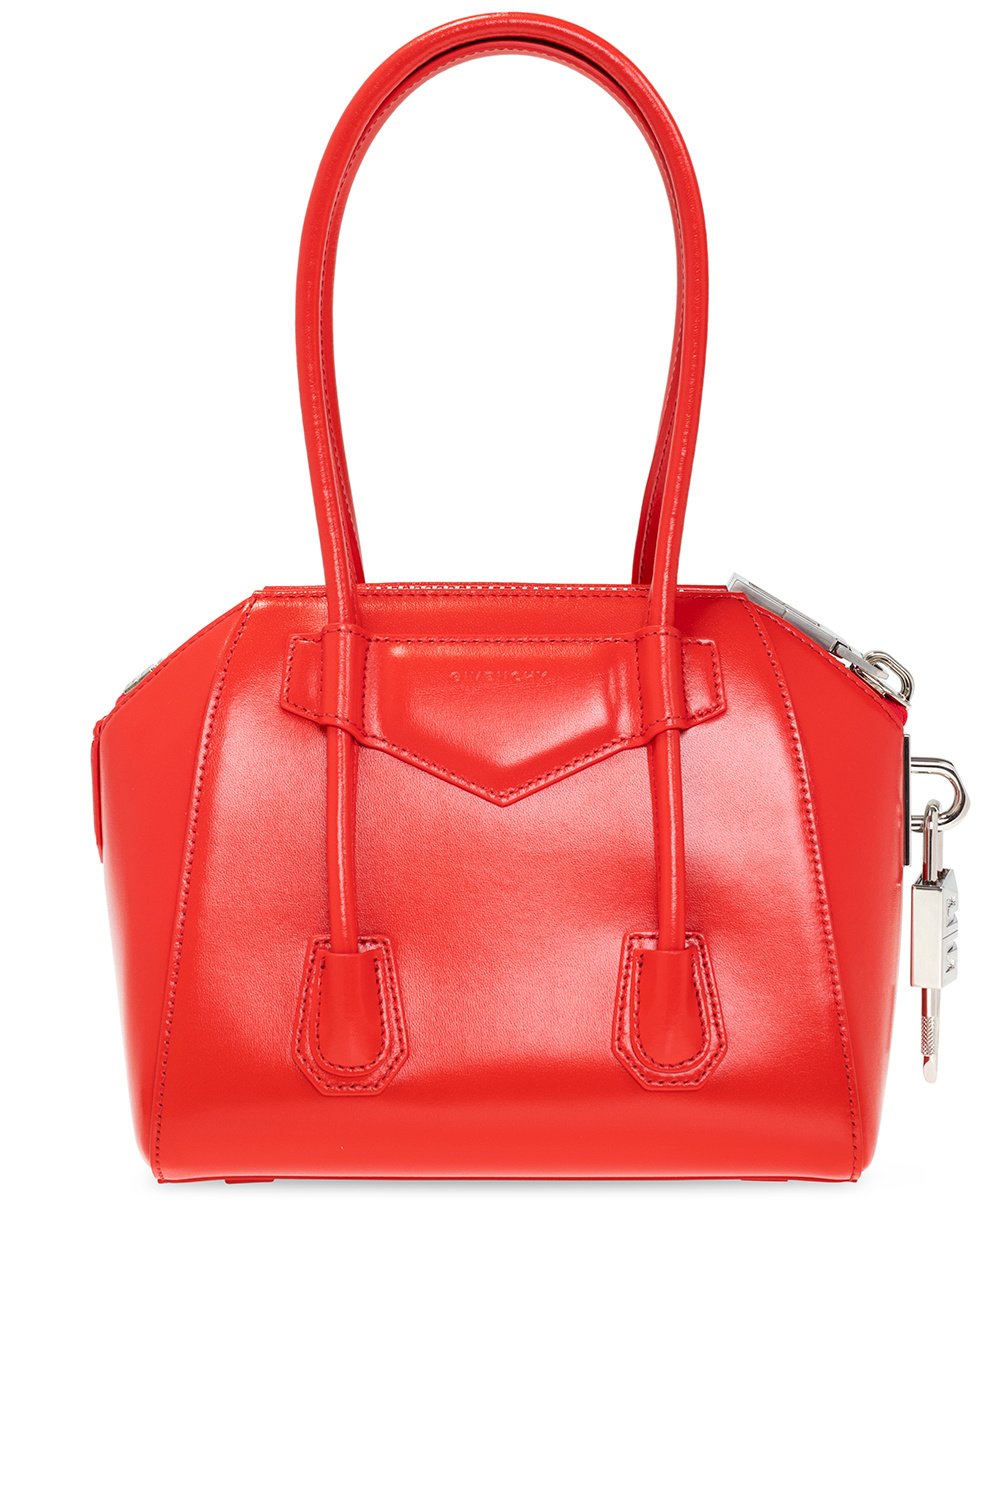 Givenchy ‘Antigona Mini’ hand bag